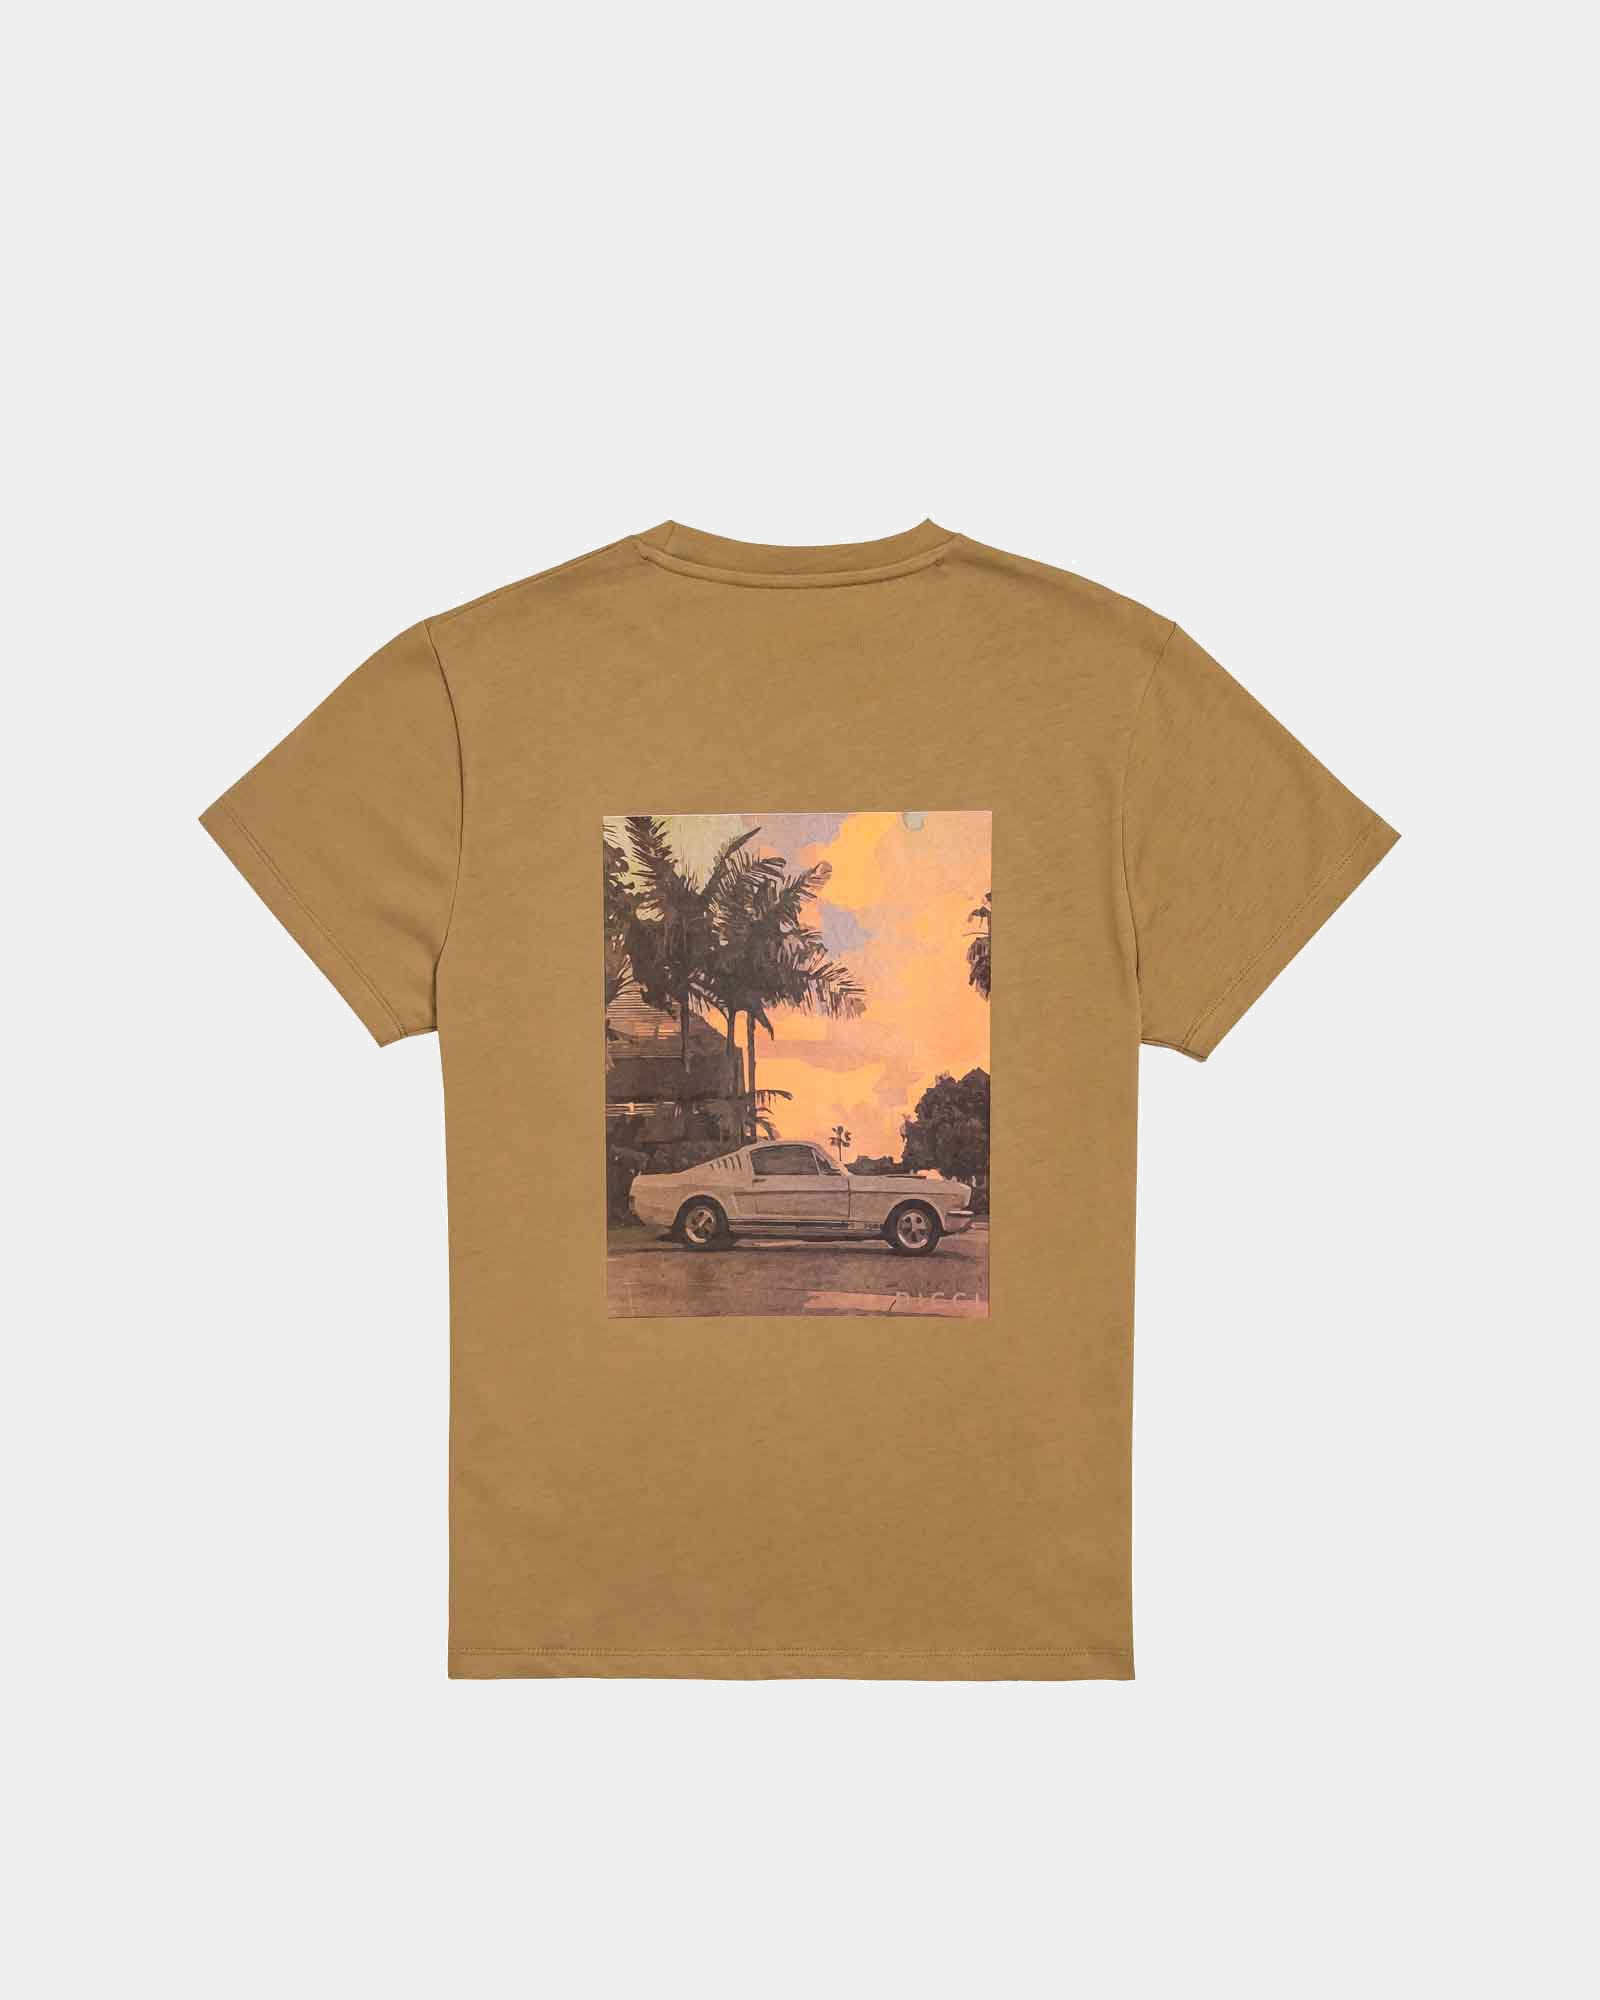 Camel t-shirt 'Sunset Drive' - Cotton Tees - Dicci Store